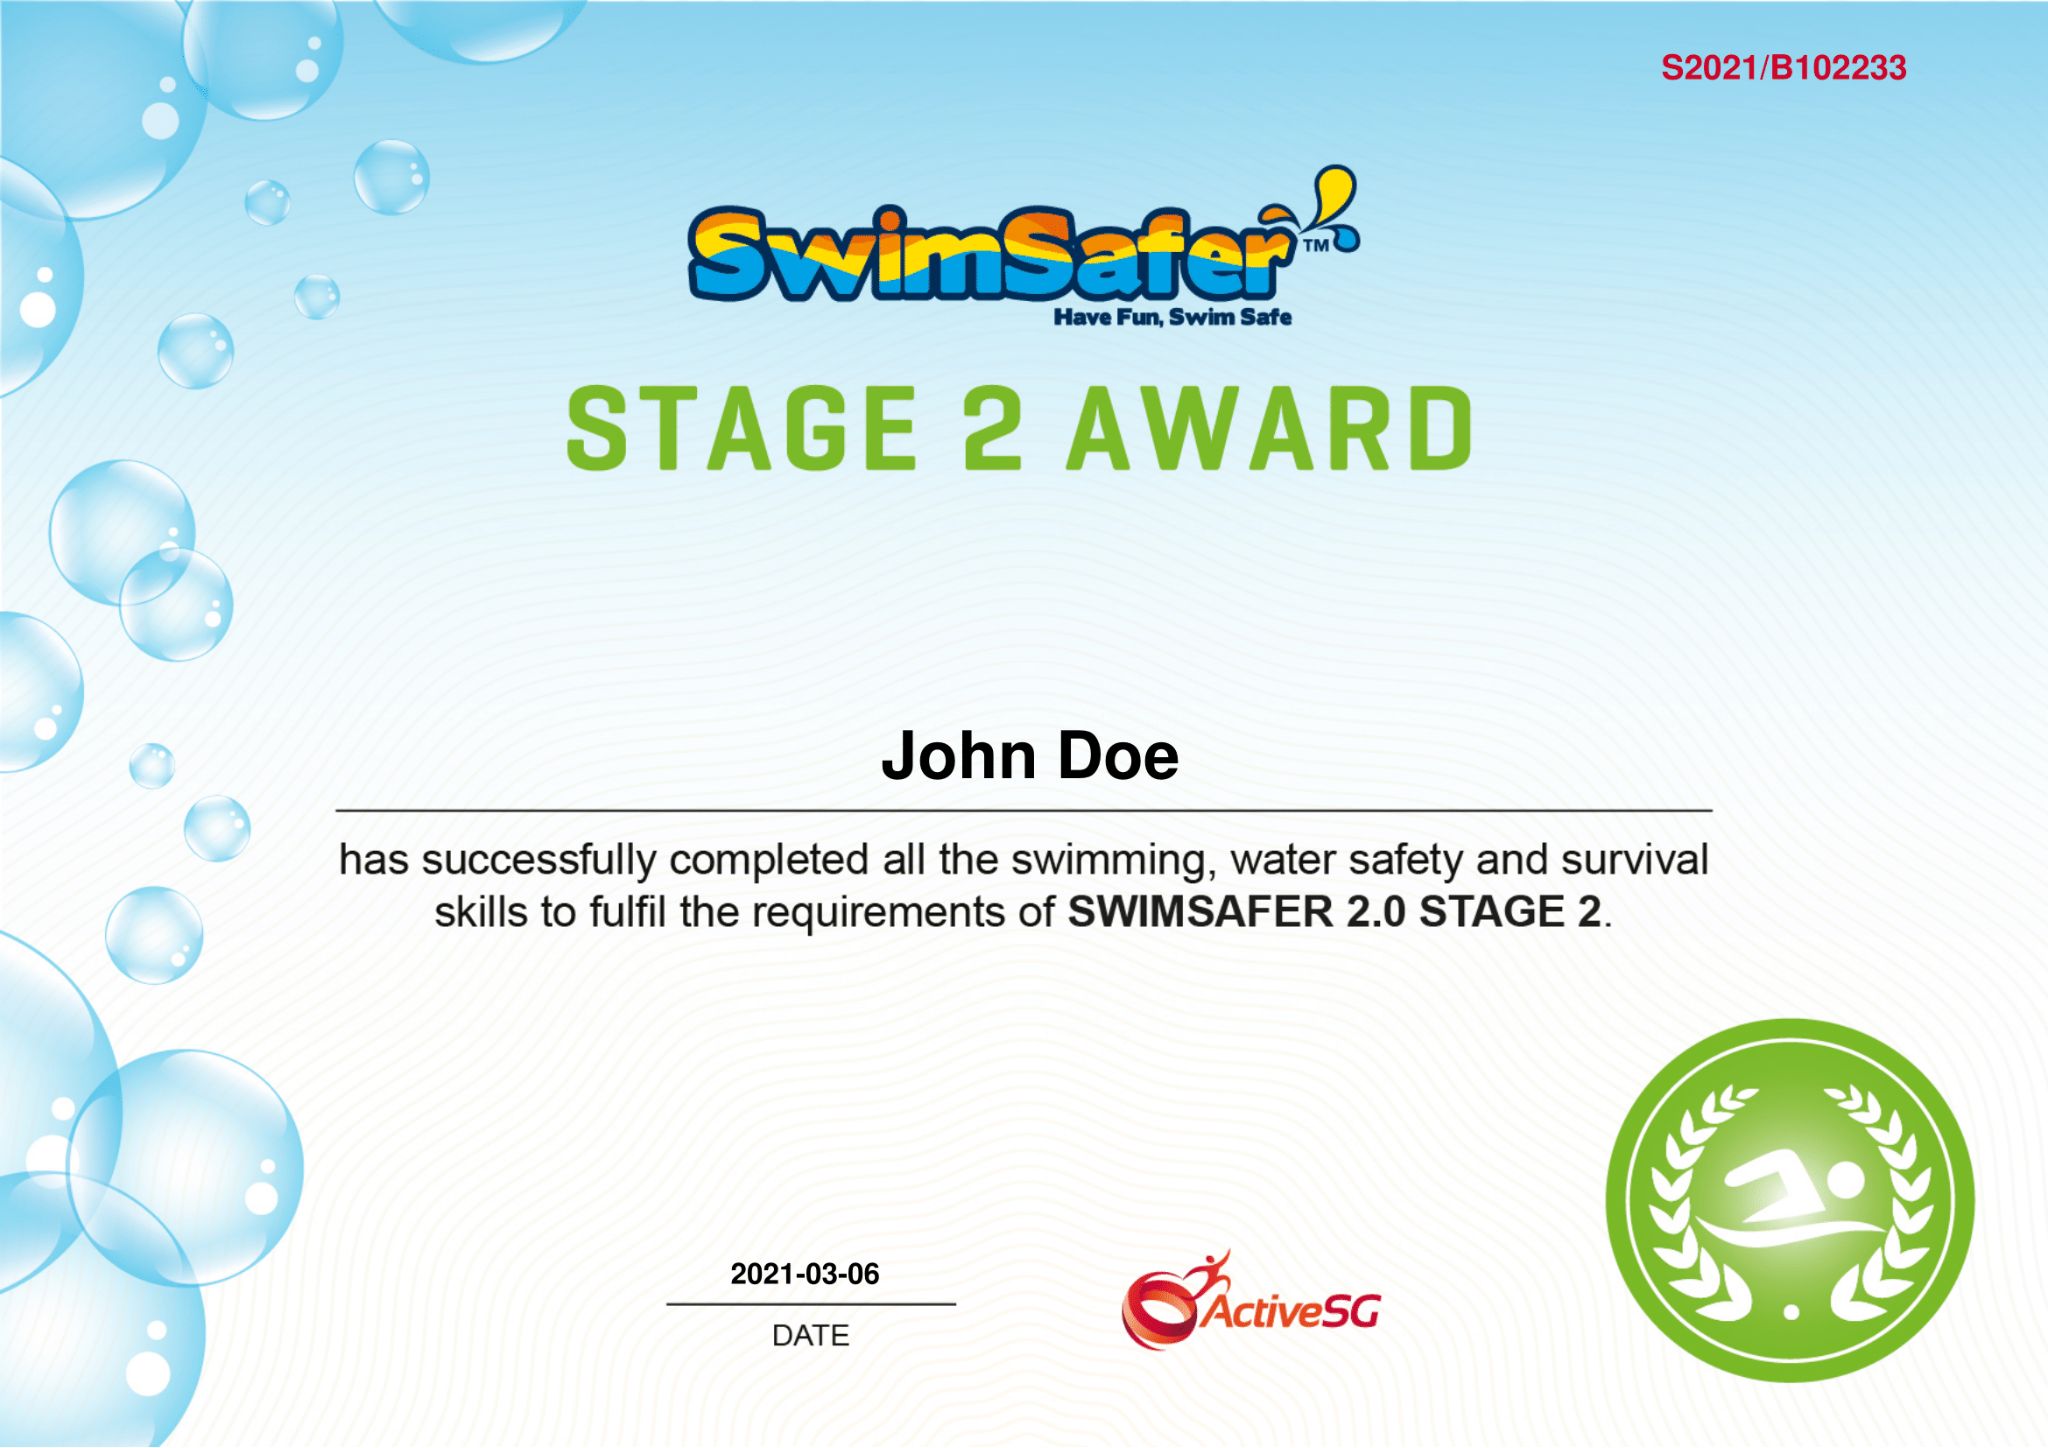 SwimSafer Stage 2